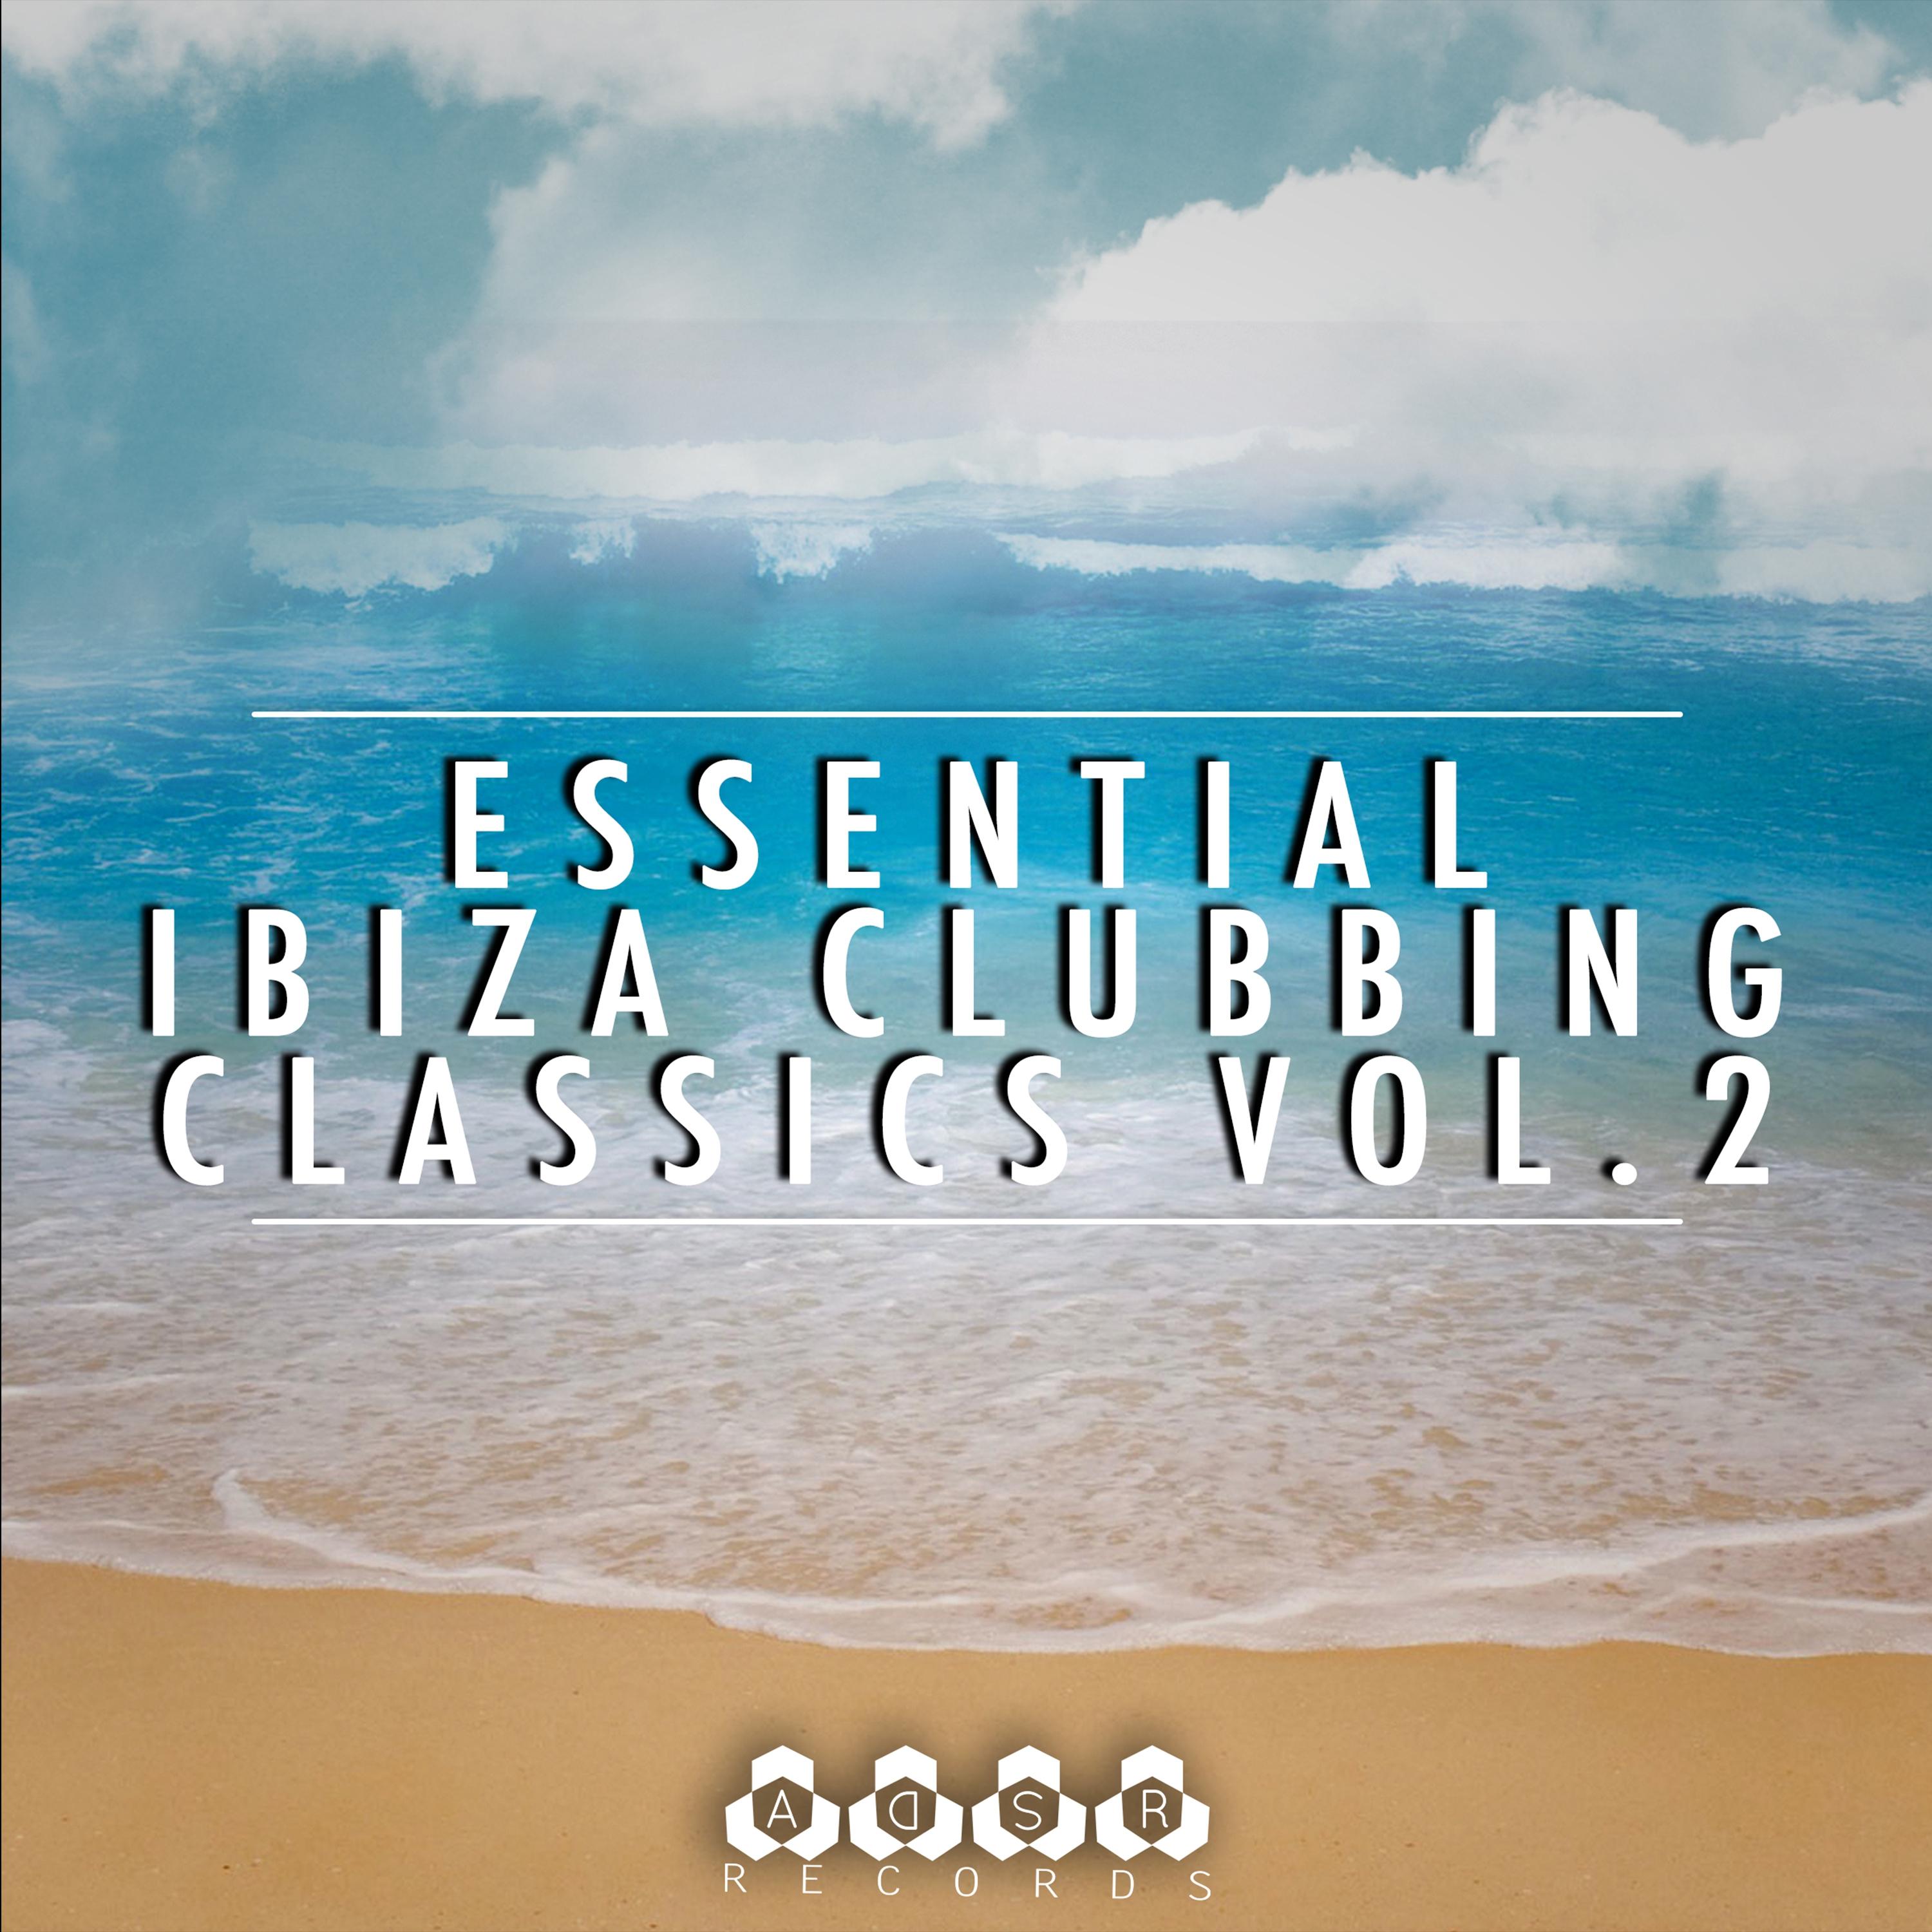 Essential Ibiza Clubbing Classics, Vol. 2